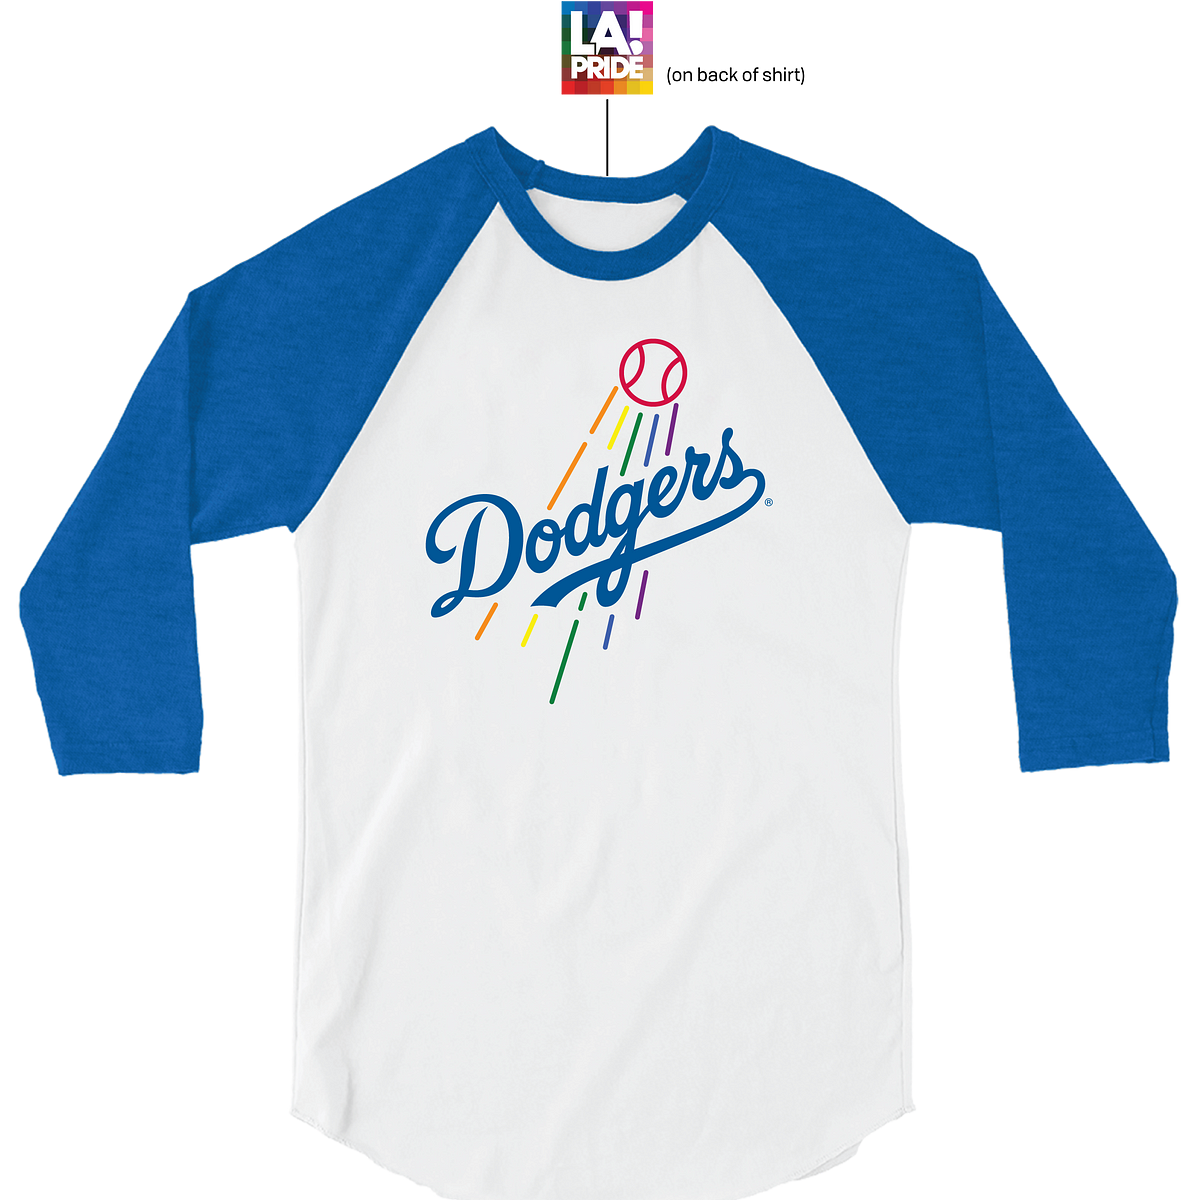 Dodgers to host sixth annual LGBT Night June 8 at Dodger Stadium, by Rowan  Kavner